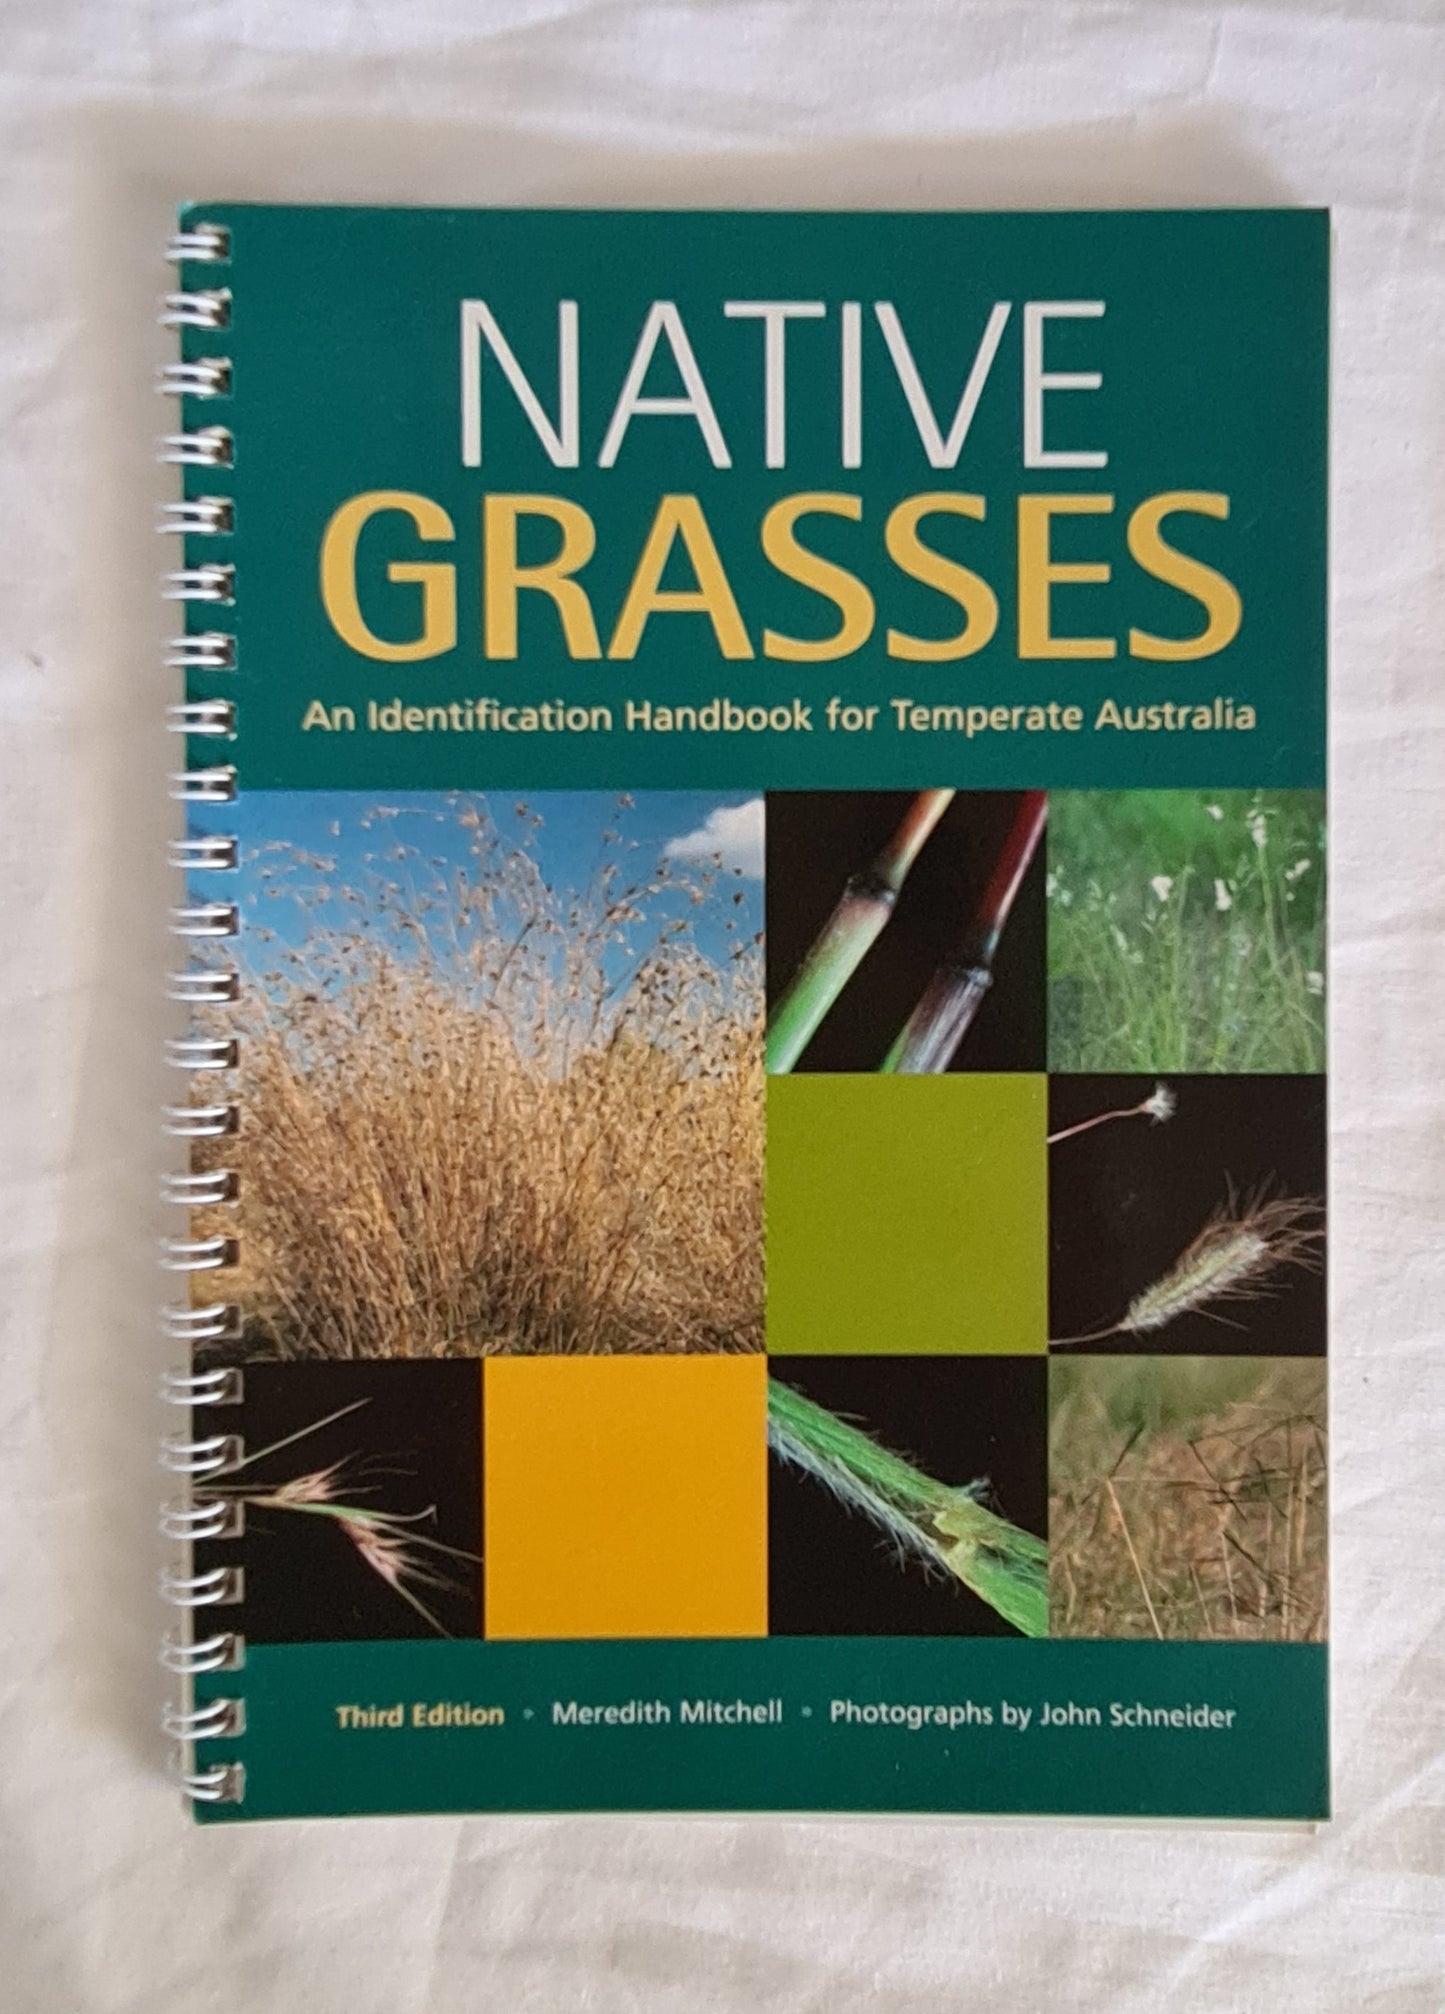 Native Grasses  An Identification Handbook for Temperate Australia  by Meredith Mitchell  Photographs by John Schneider